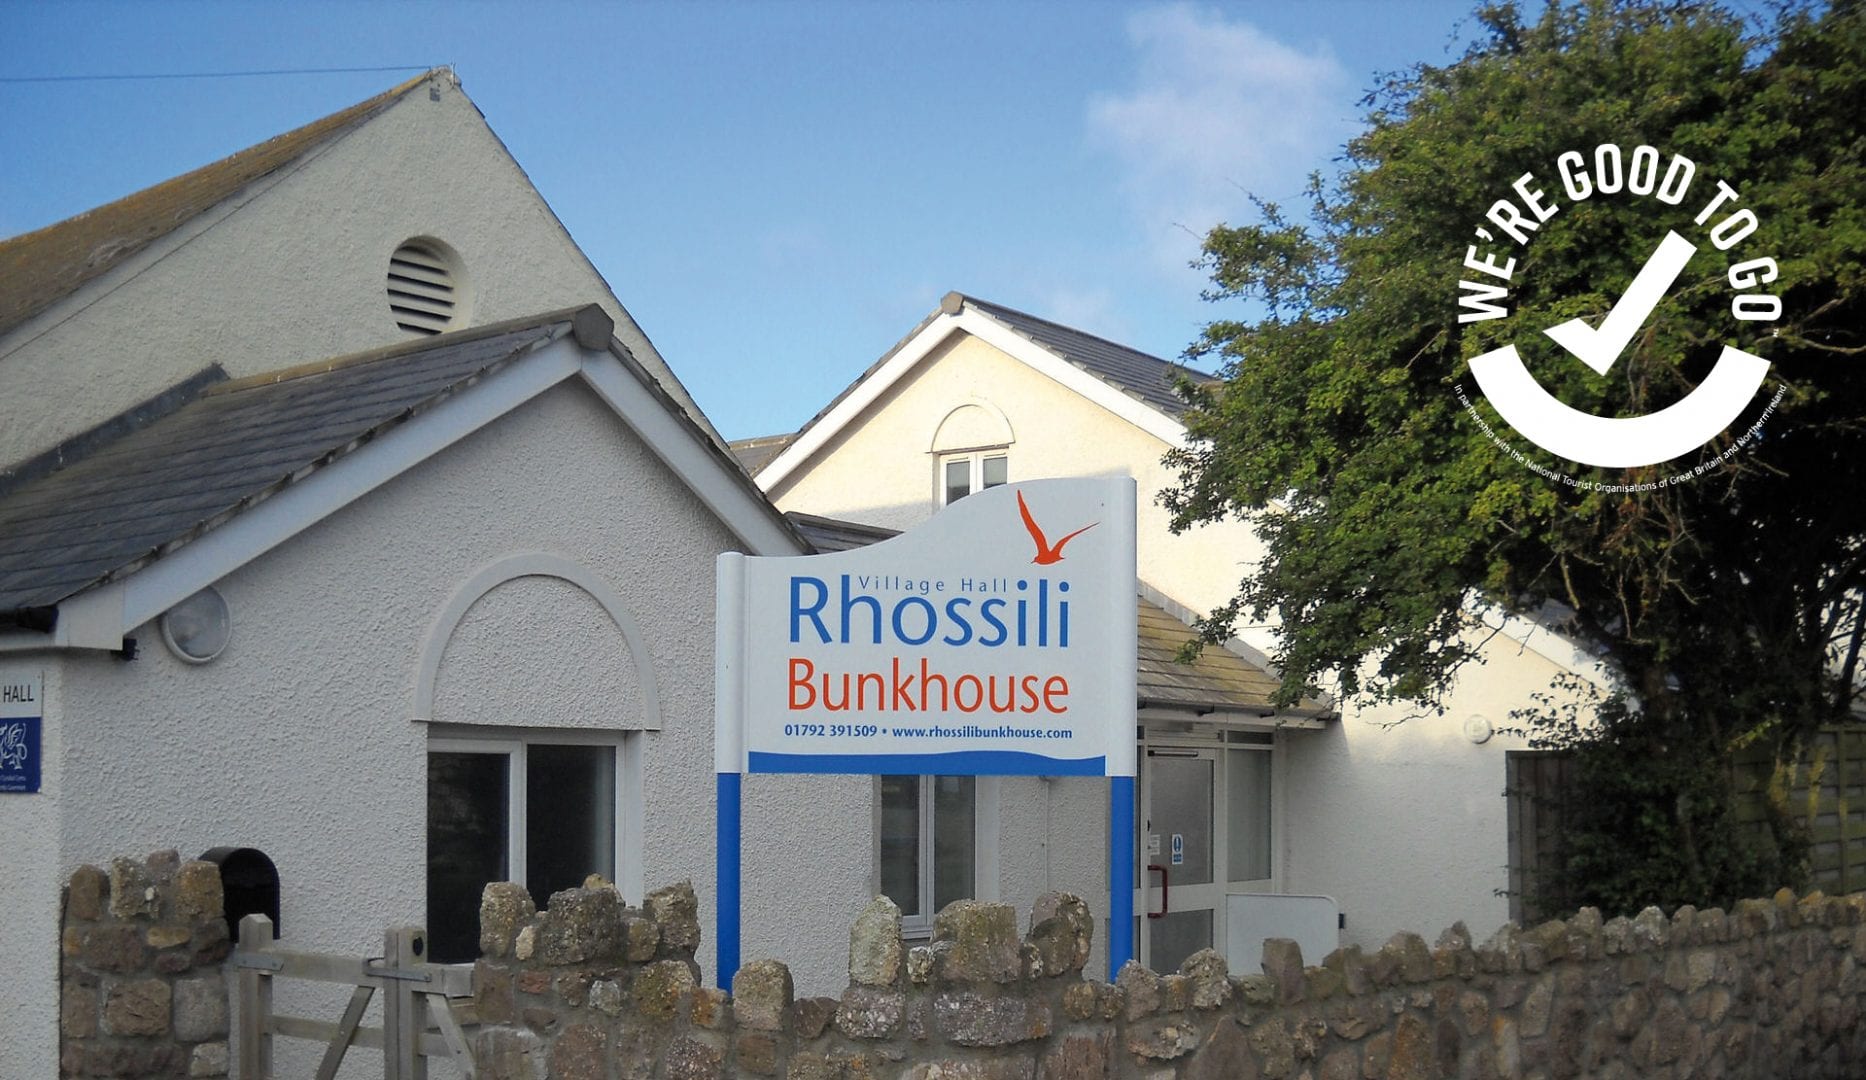 Rhossili Bunkhouse and Good to Go logo